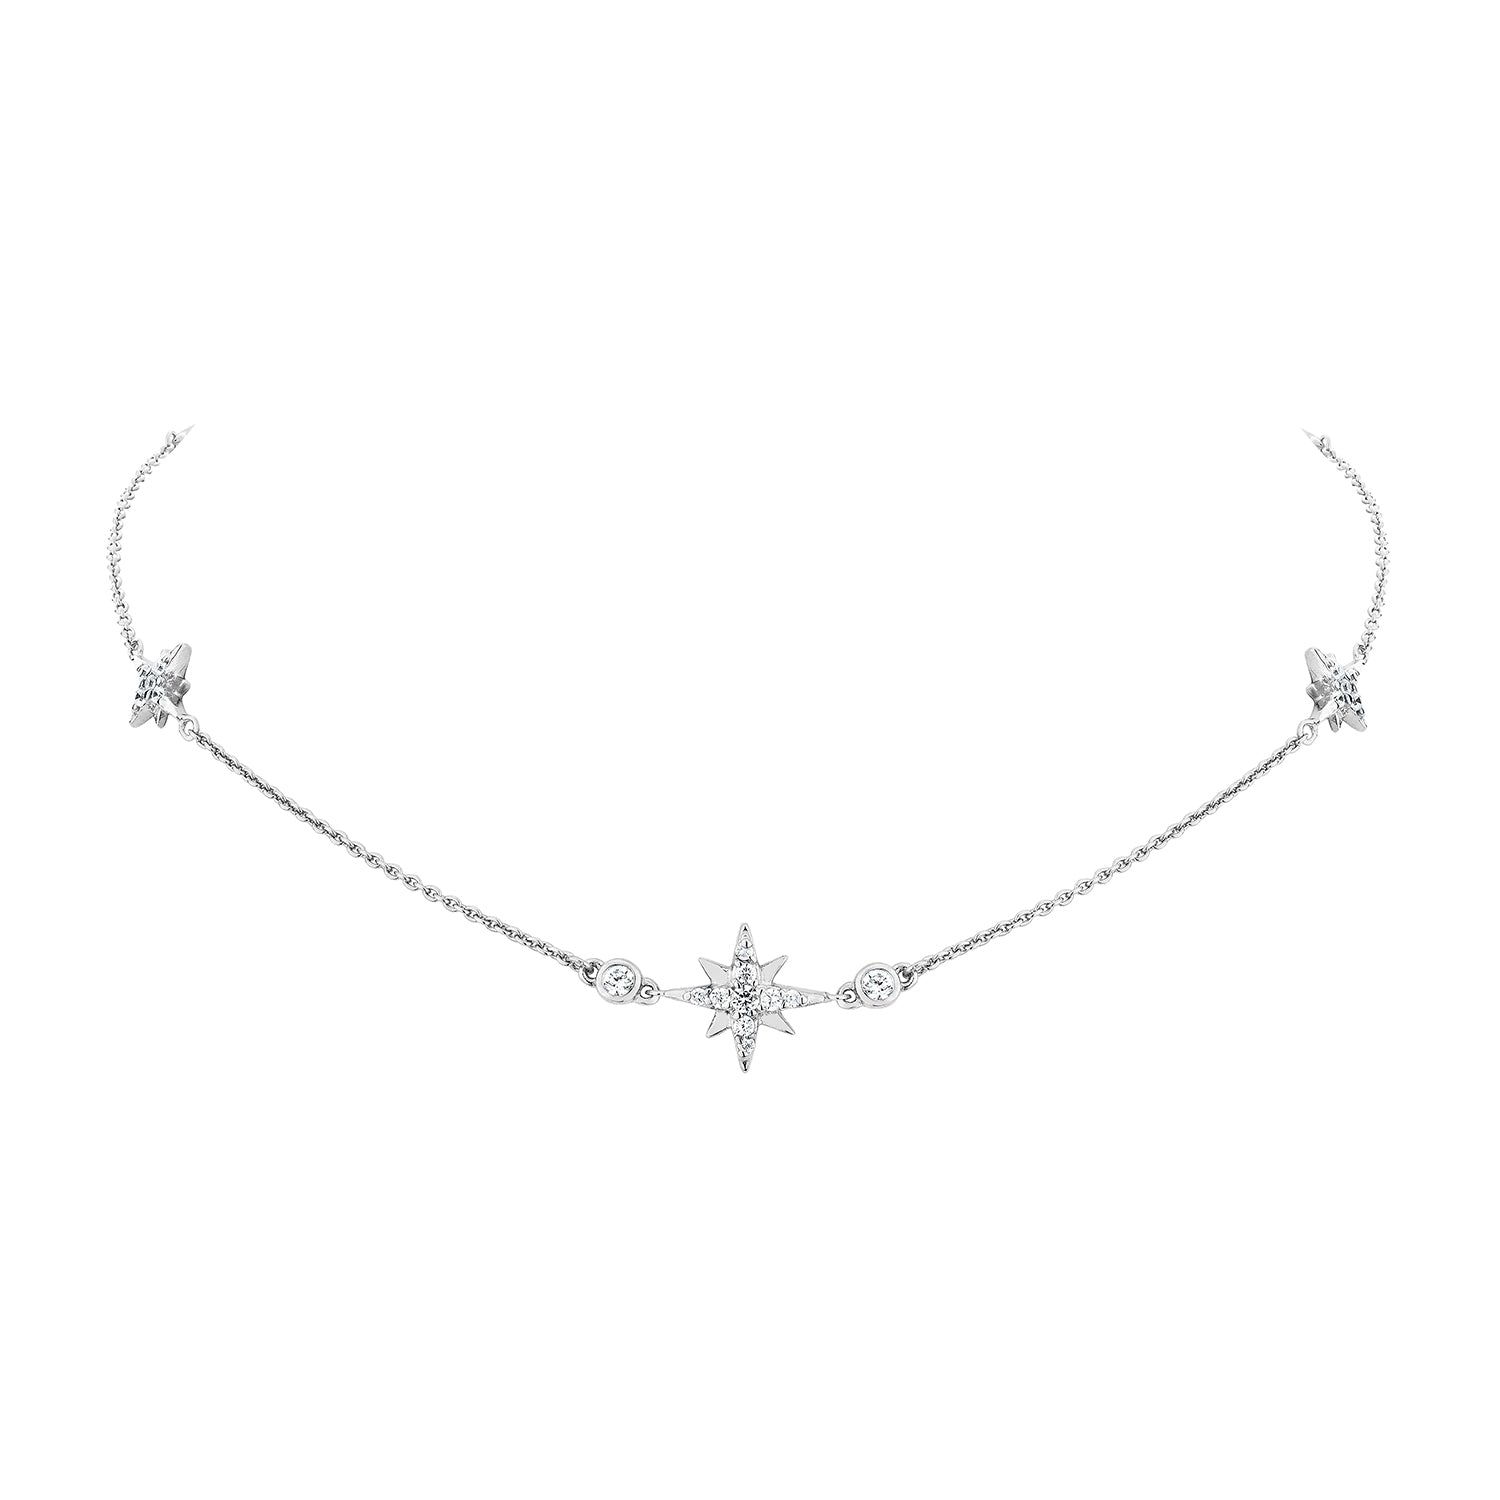 Celestial Chain Necklace - Whitegold